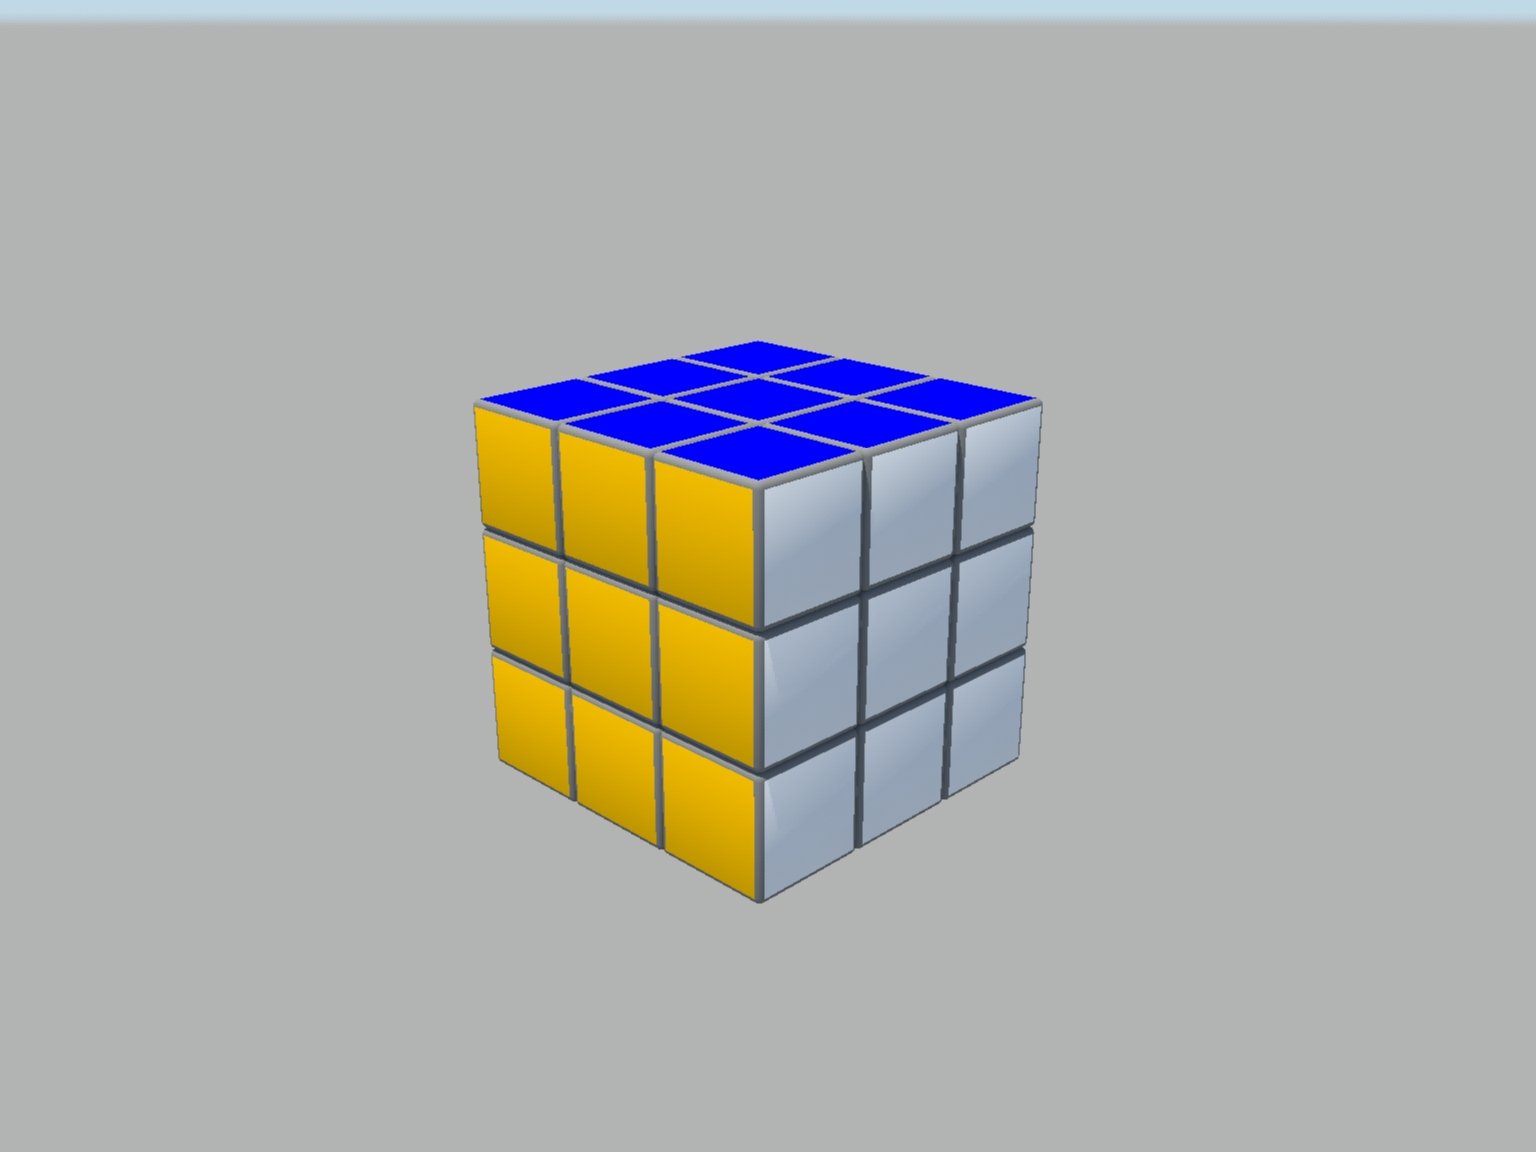 Rubik's Cube 3д